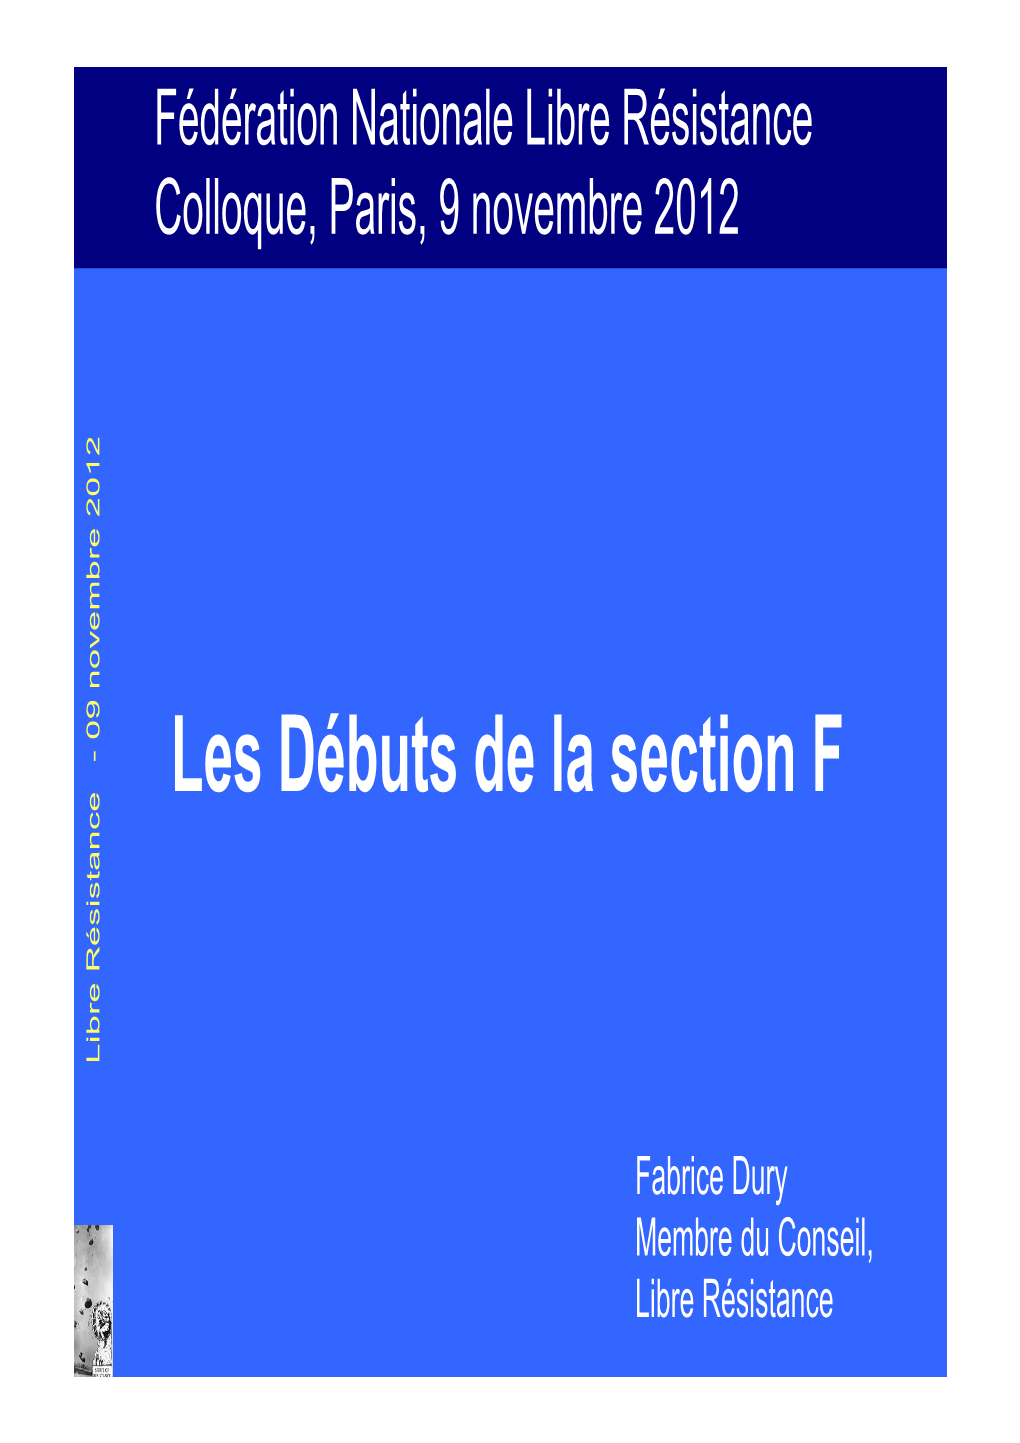 Présentation Fabrice Dury